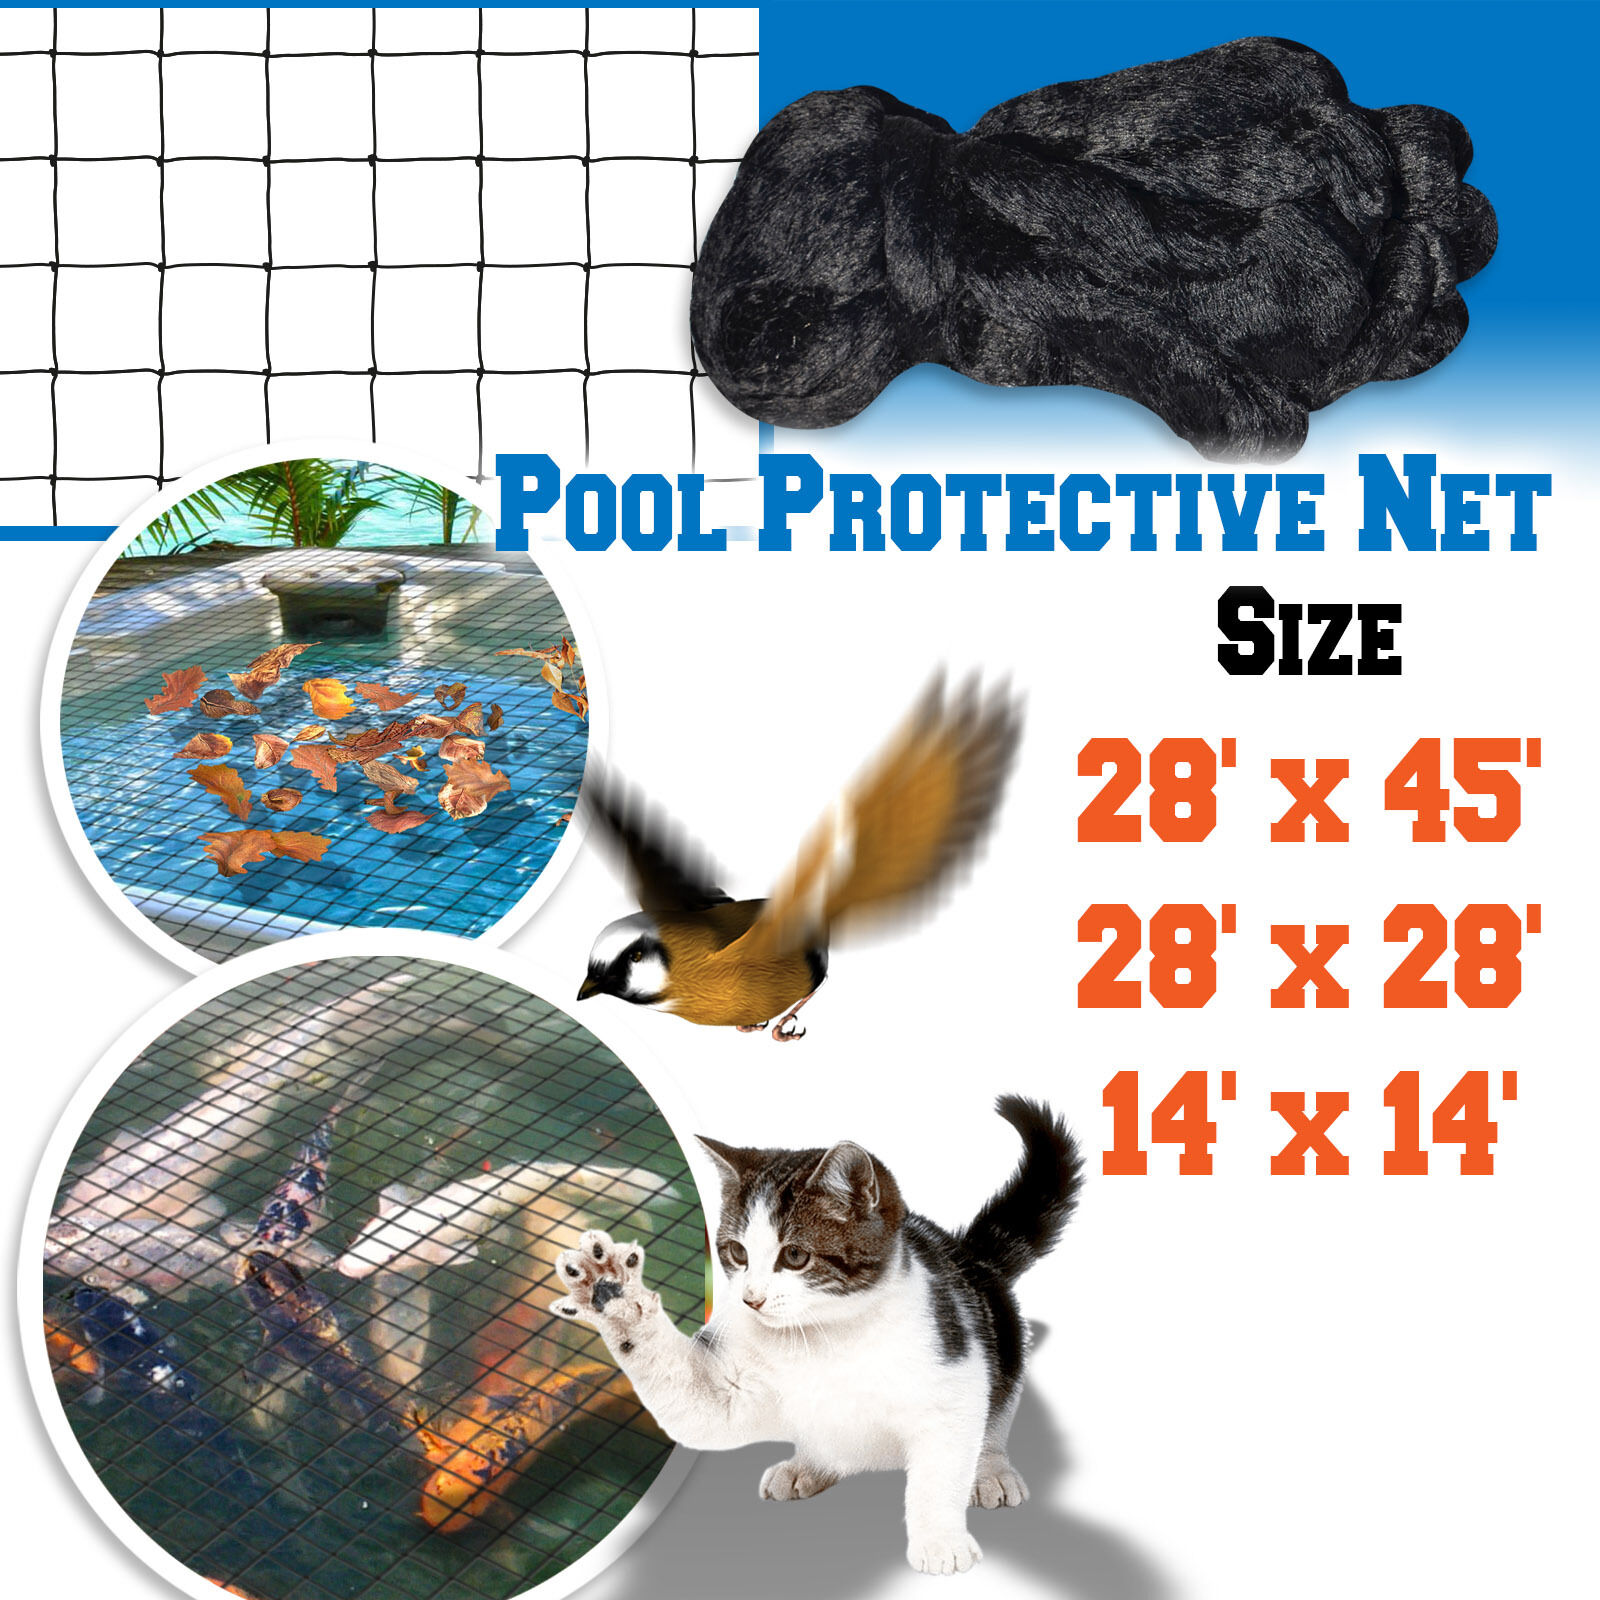 Pool Netting Pond Protective Floating Net 14x14' 28x28' 28x45' Tub Mesh Cover